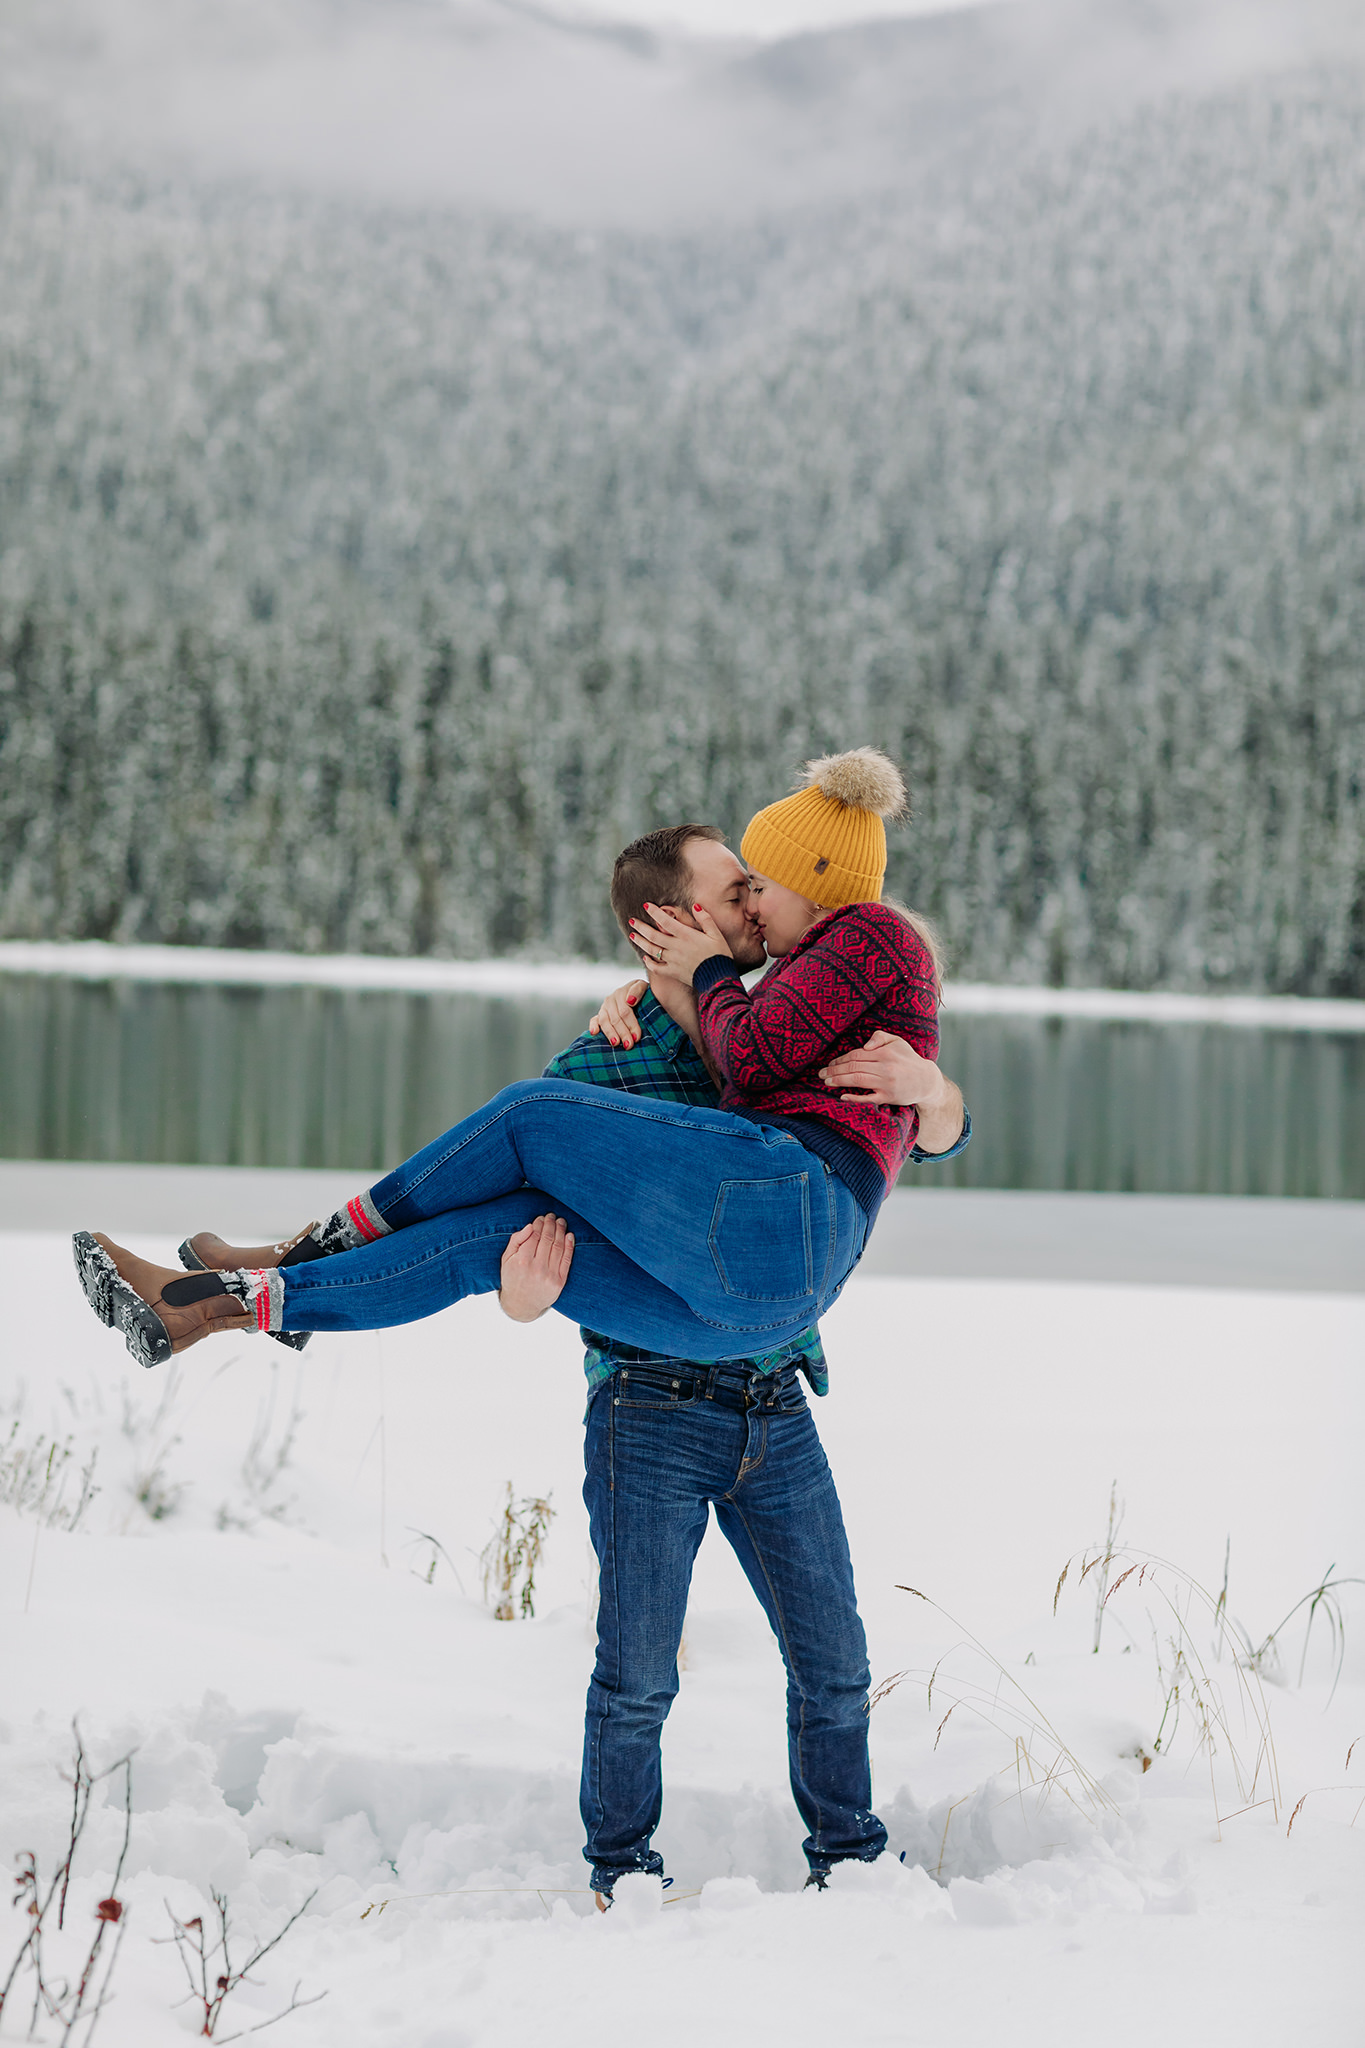 emerald lake winter engagement photos with freshly frozen lake & colourful style